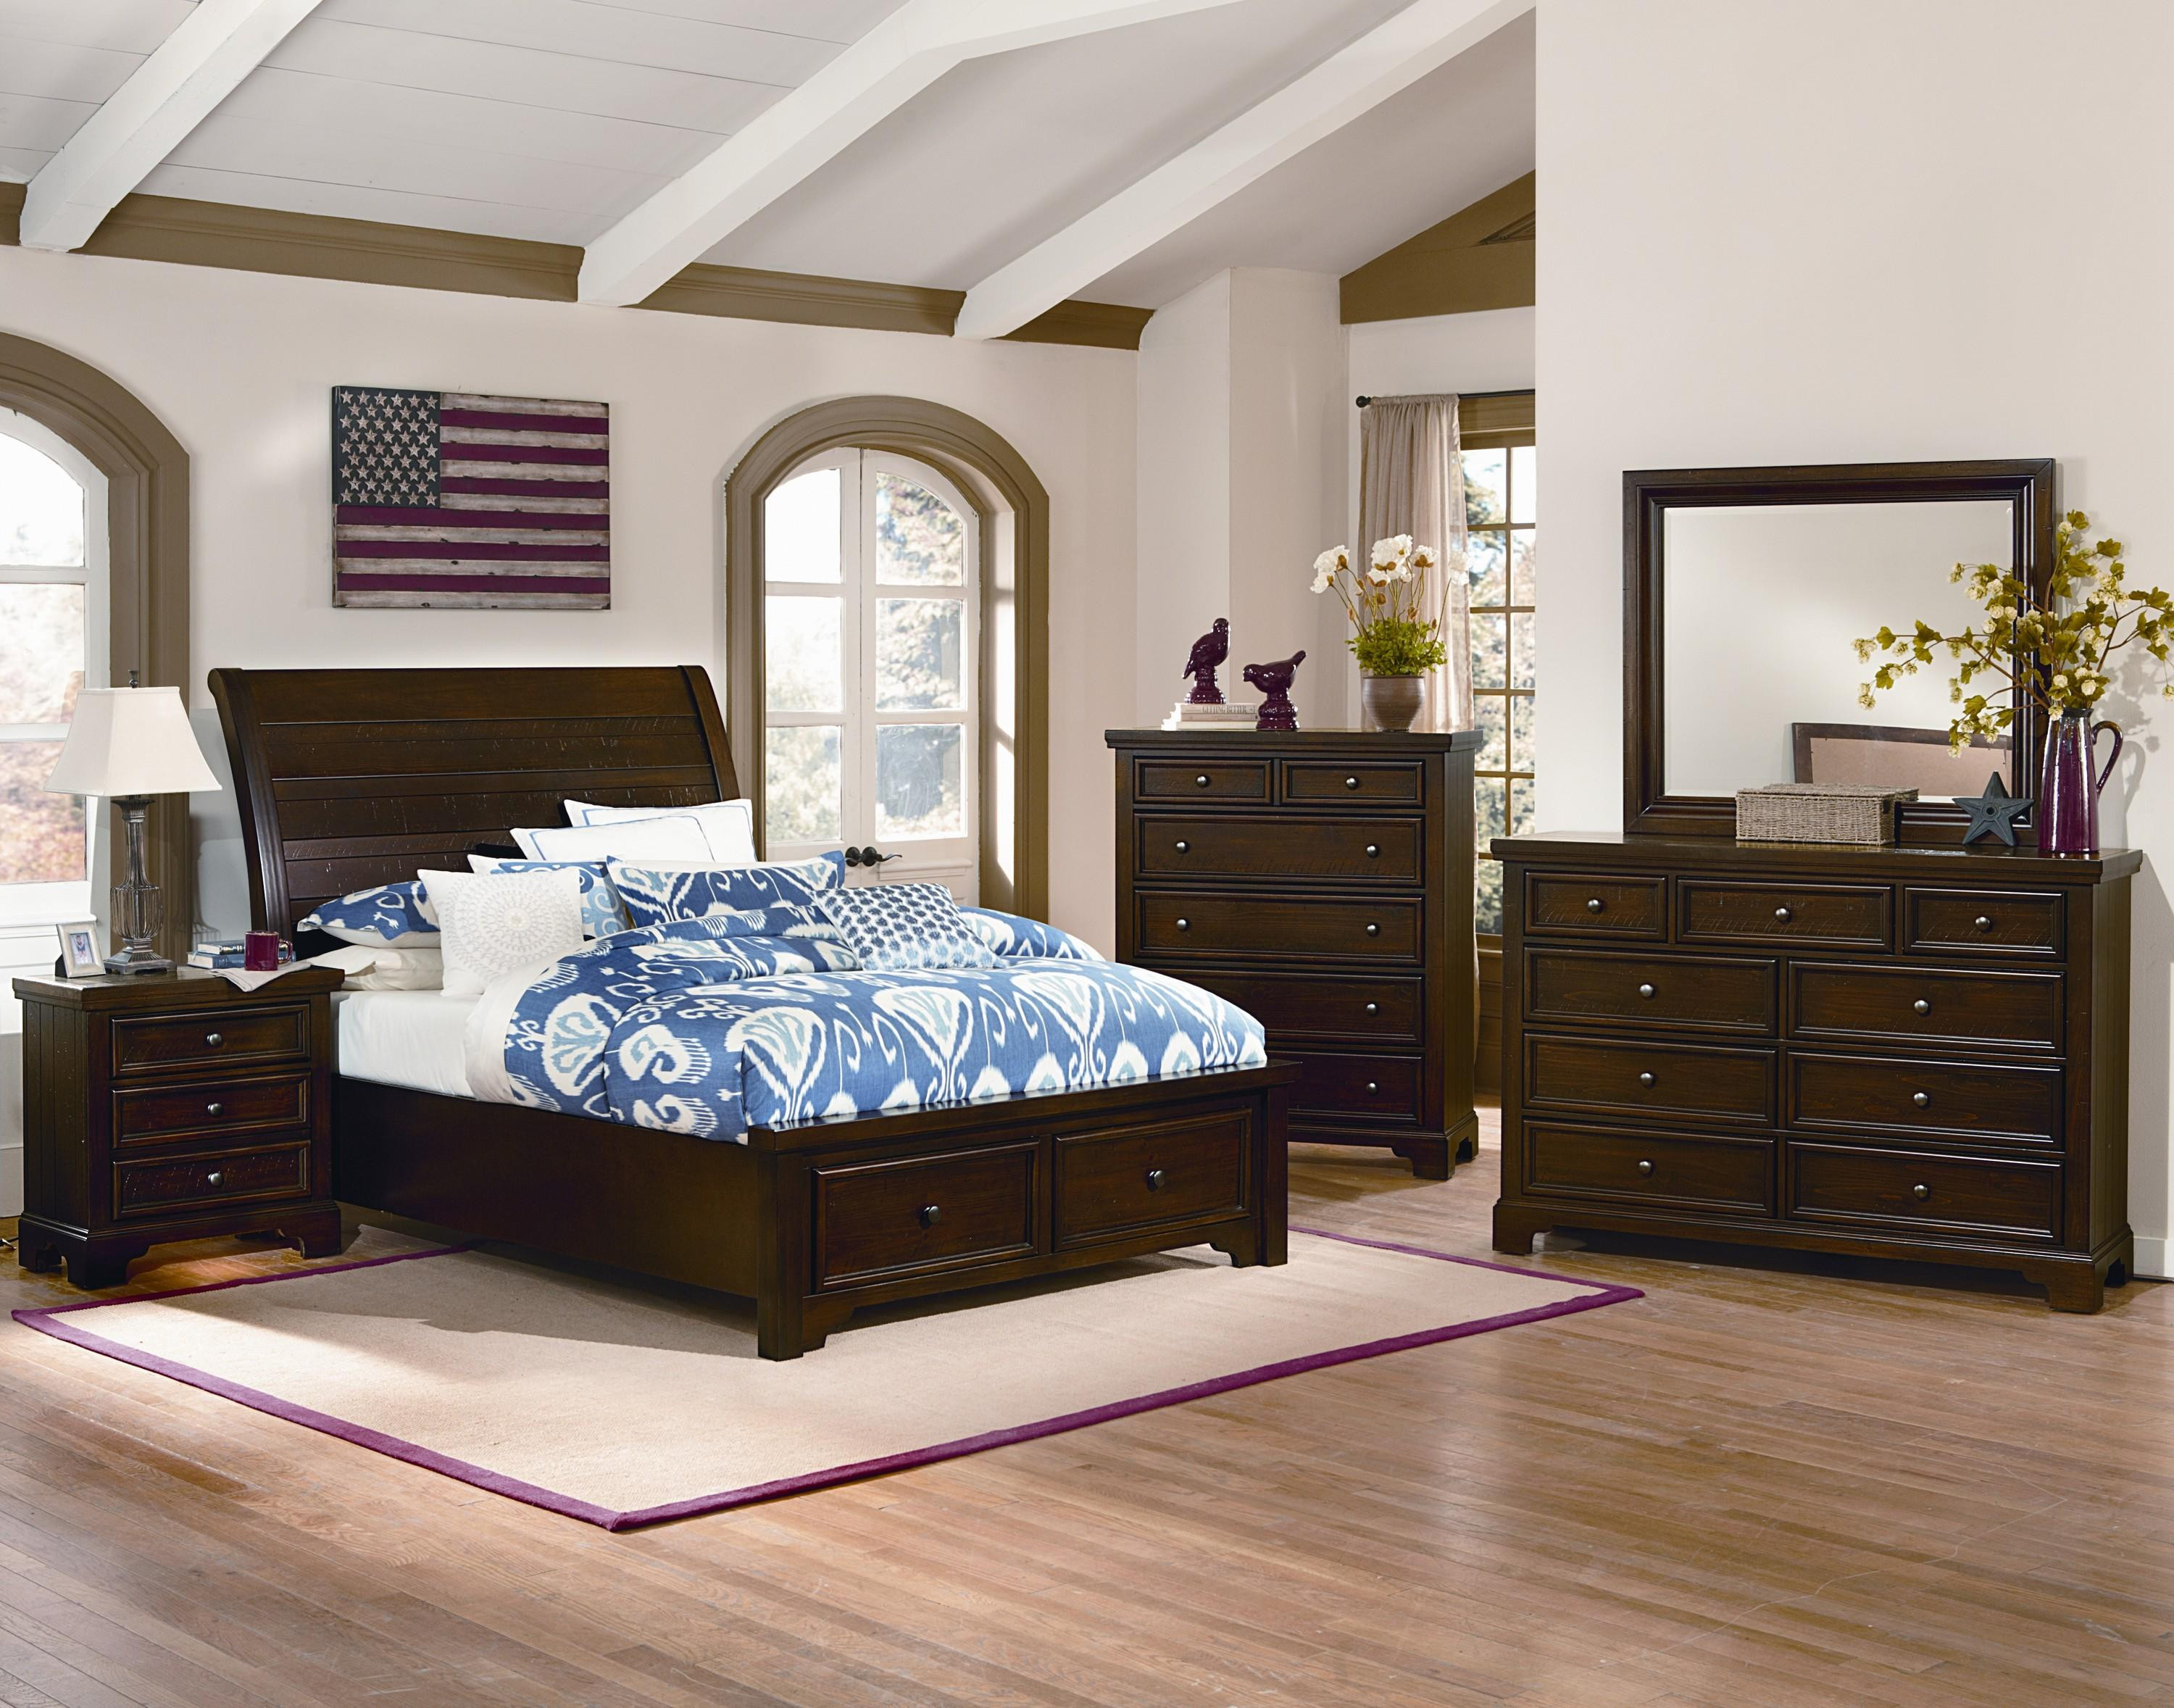 Best ideas about Bassett Bedroom Furniture
. Save or Pin Vaughan Bassett Hanover Full Bedroom Group Now.